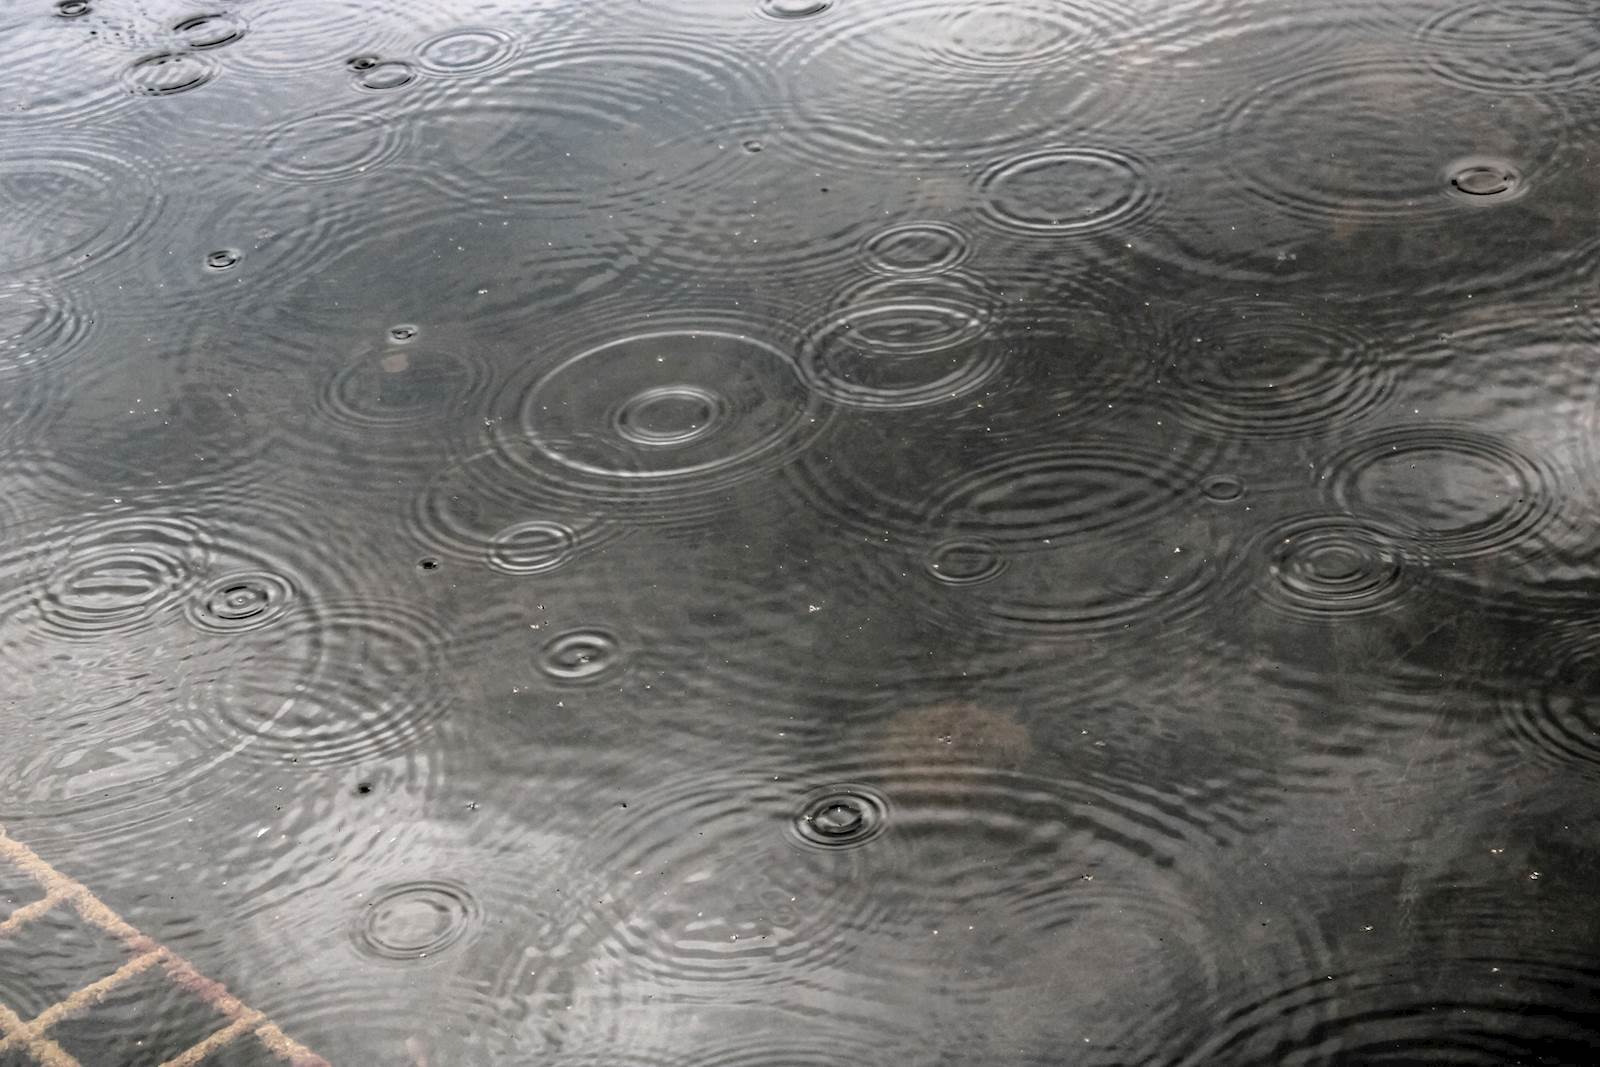 raindrops on a pavement